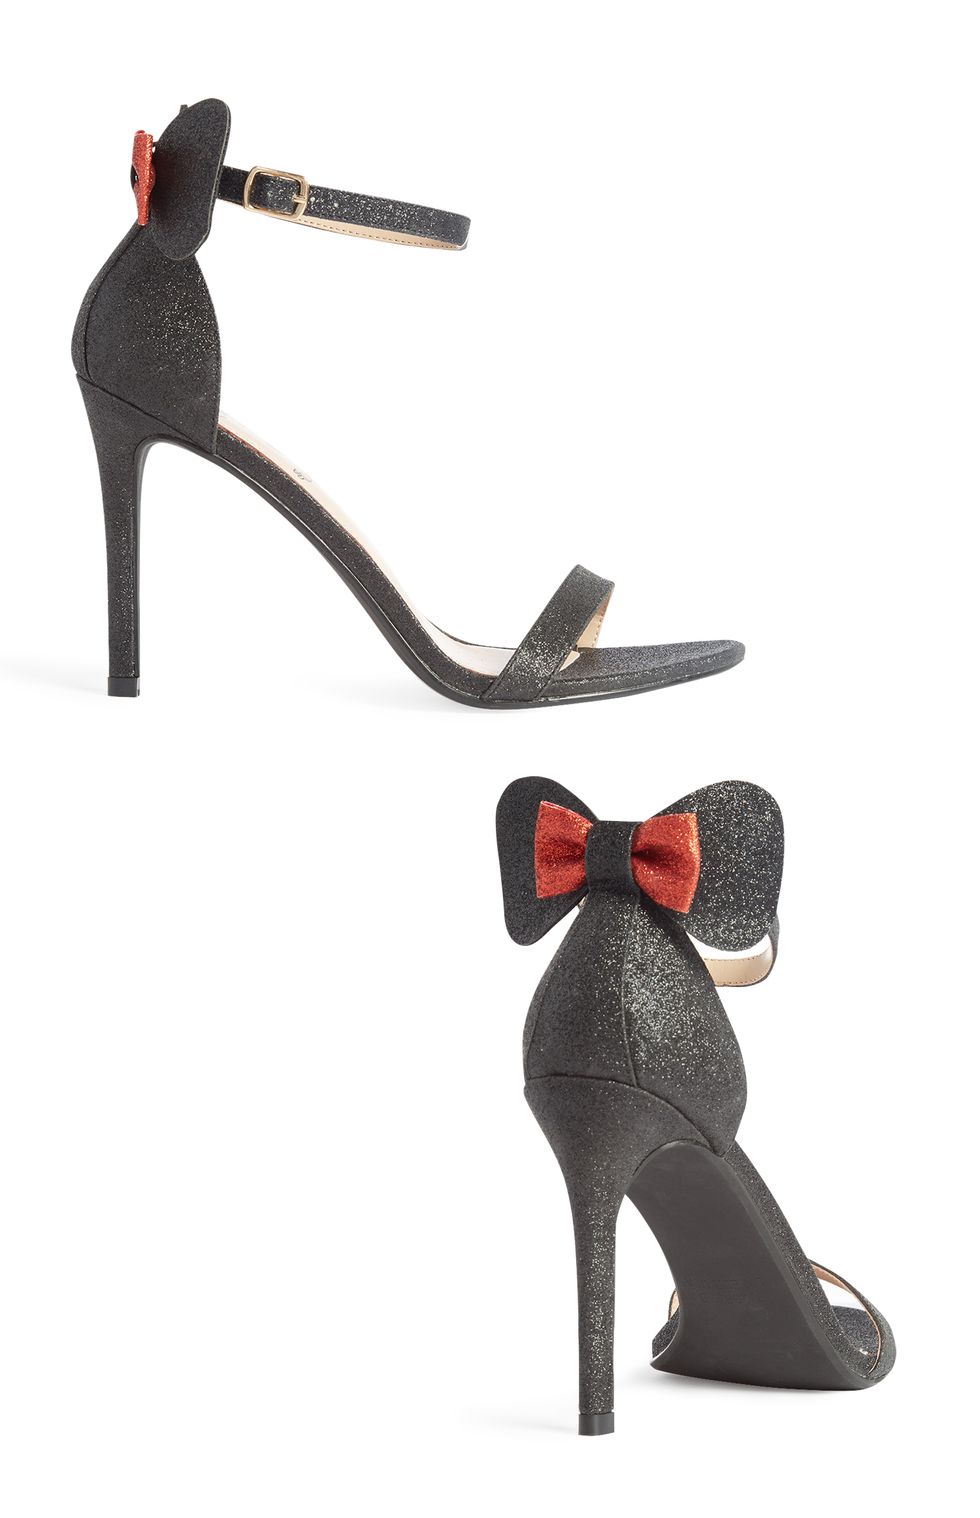 Primark Minnie Mouse heels